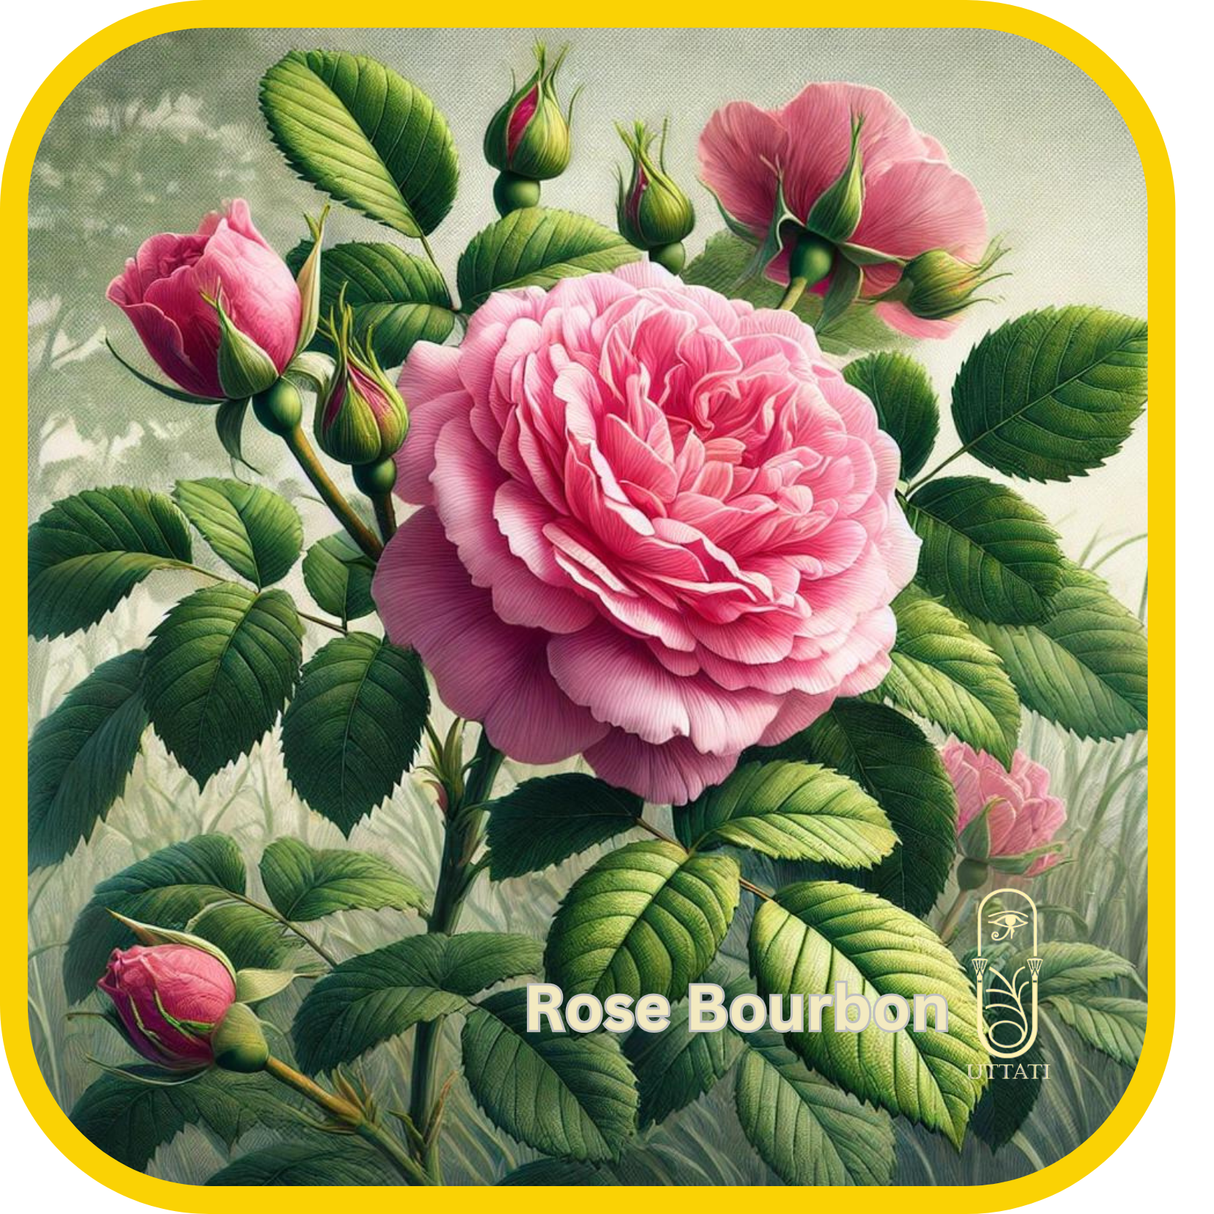 Rose Bourbon